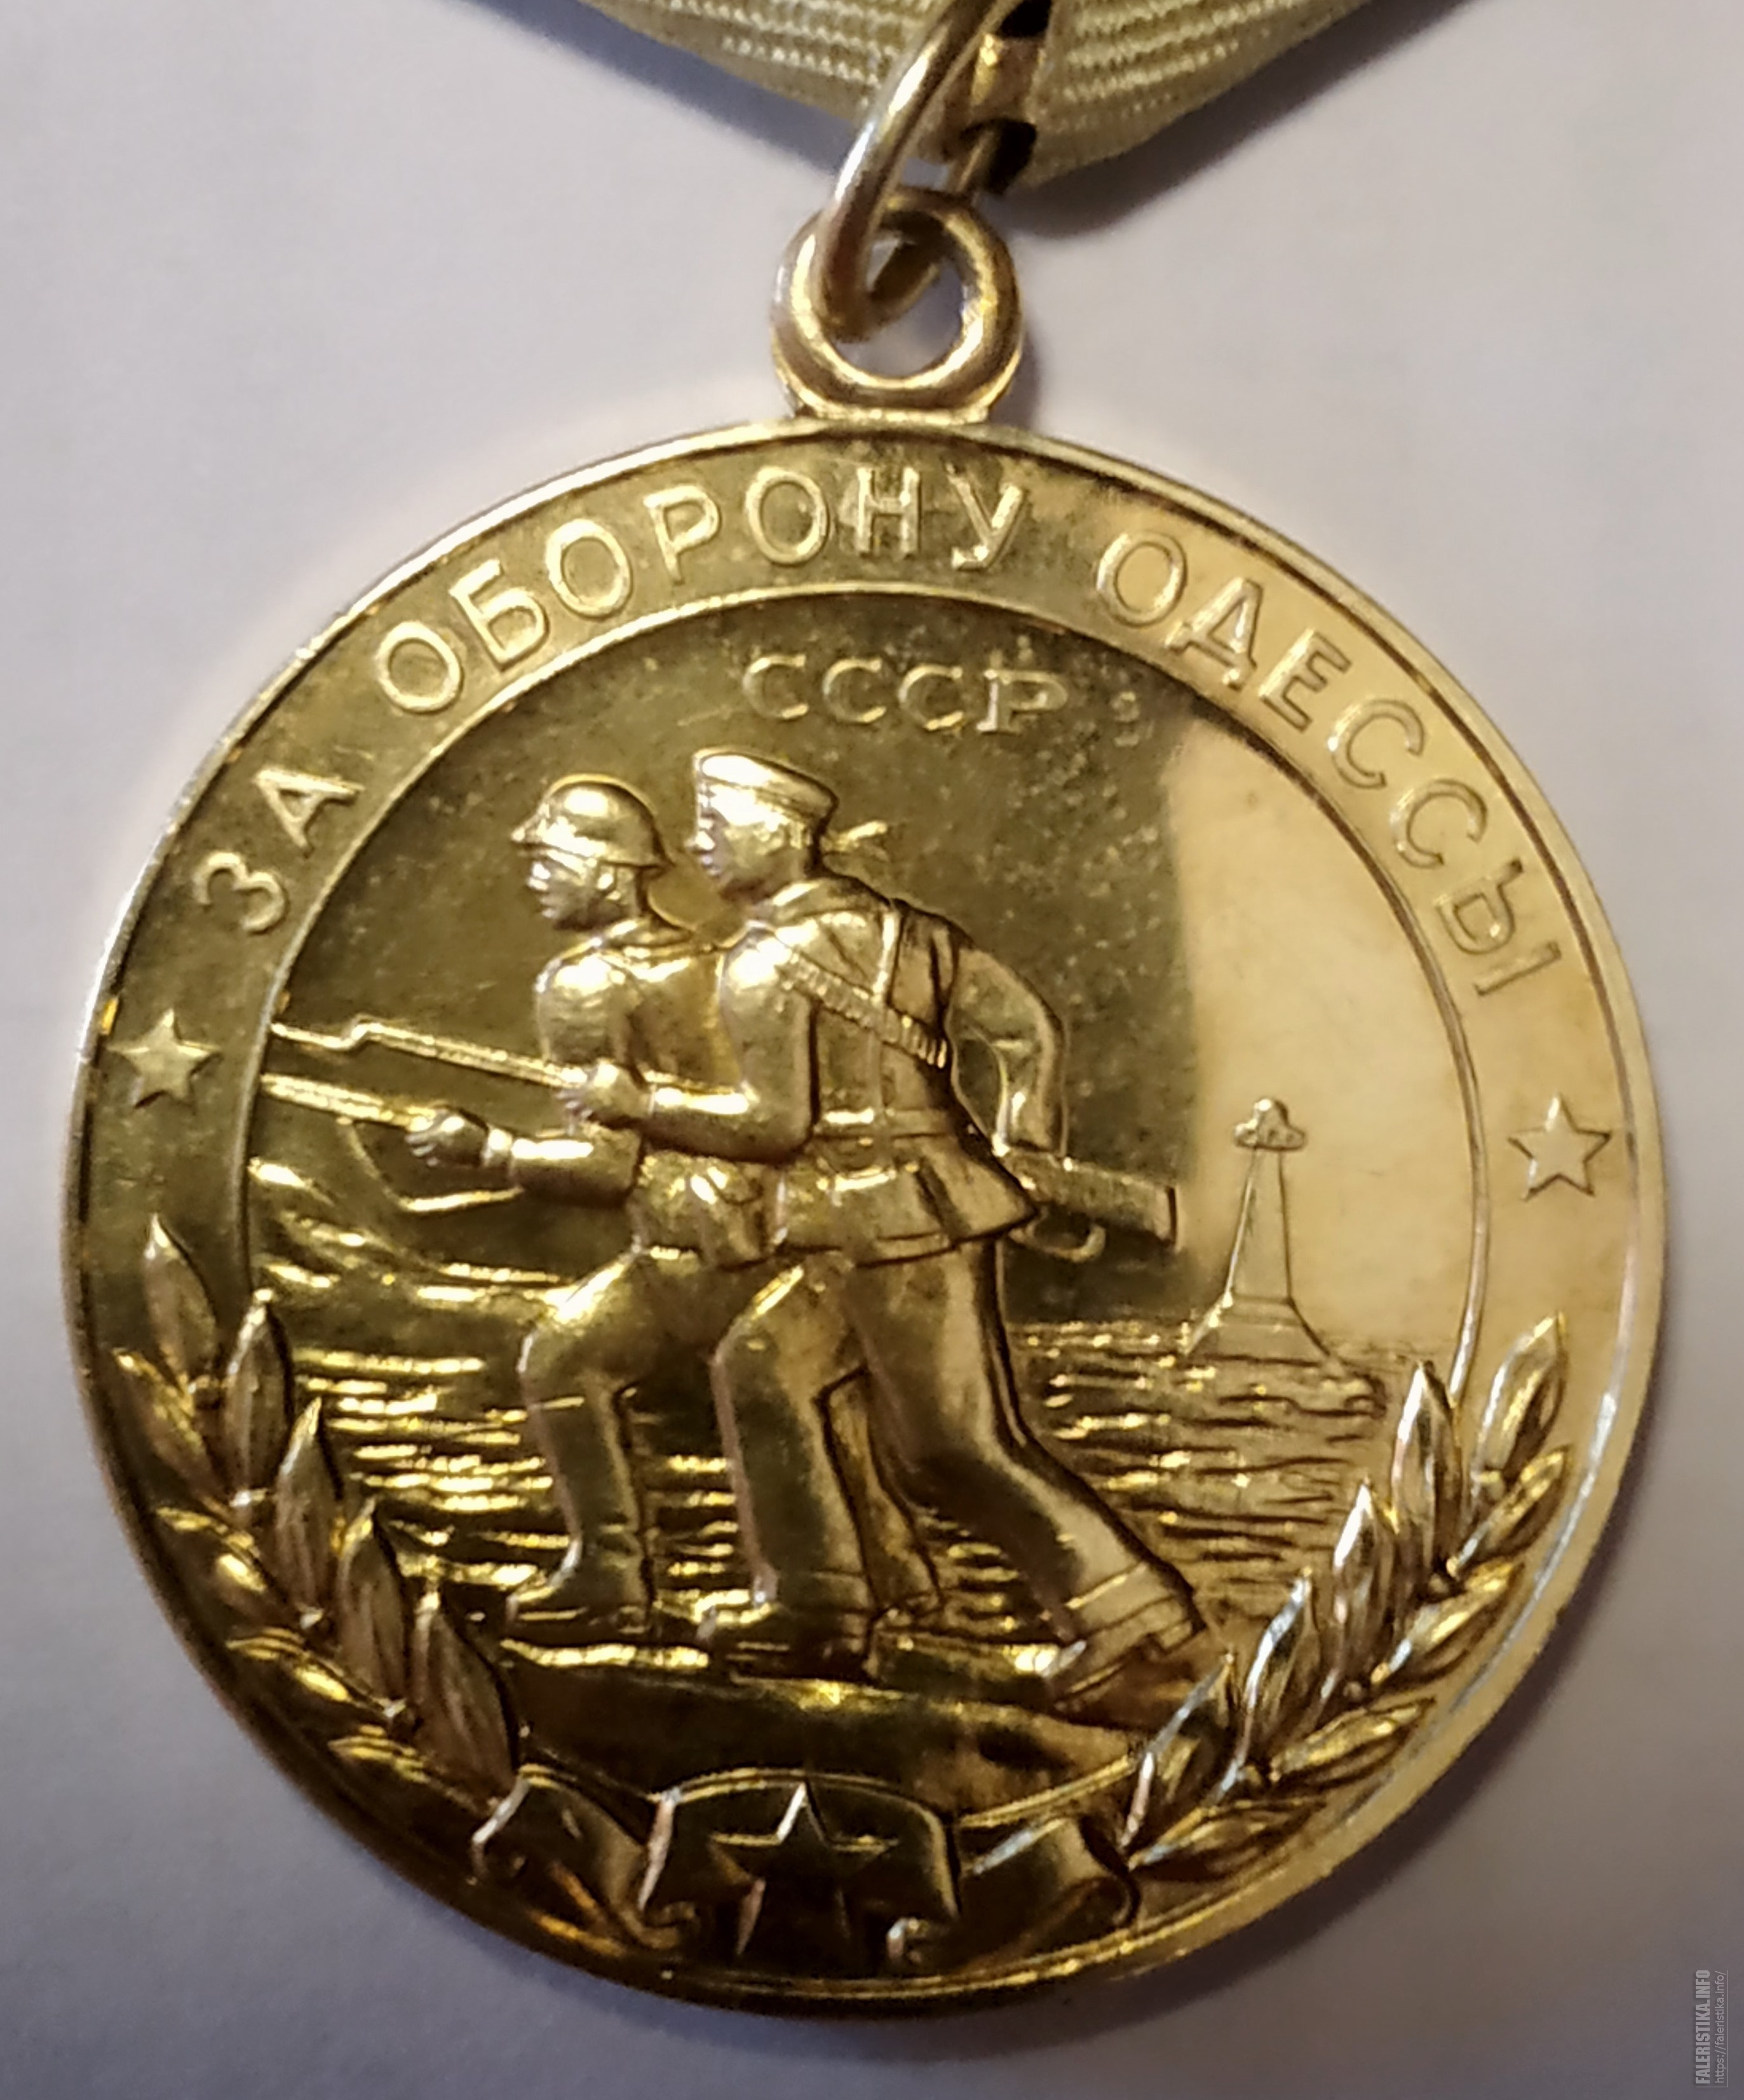 Медаль за оборону. За оборону Одессы. Орден за оборону Одессы. Медаль за оборону Одессы фото. Медаль оборона Одессы.